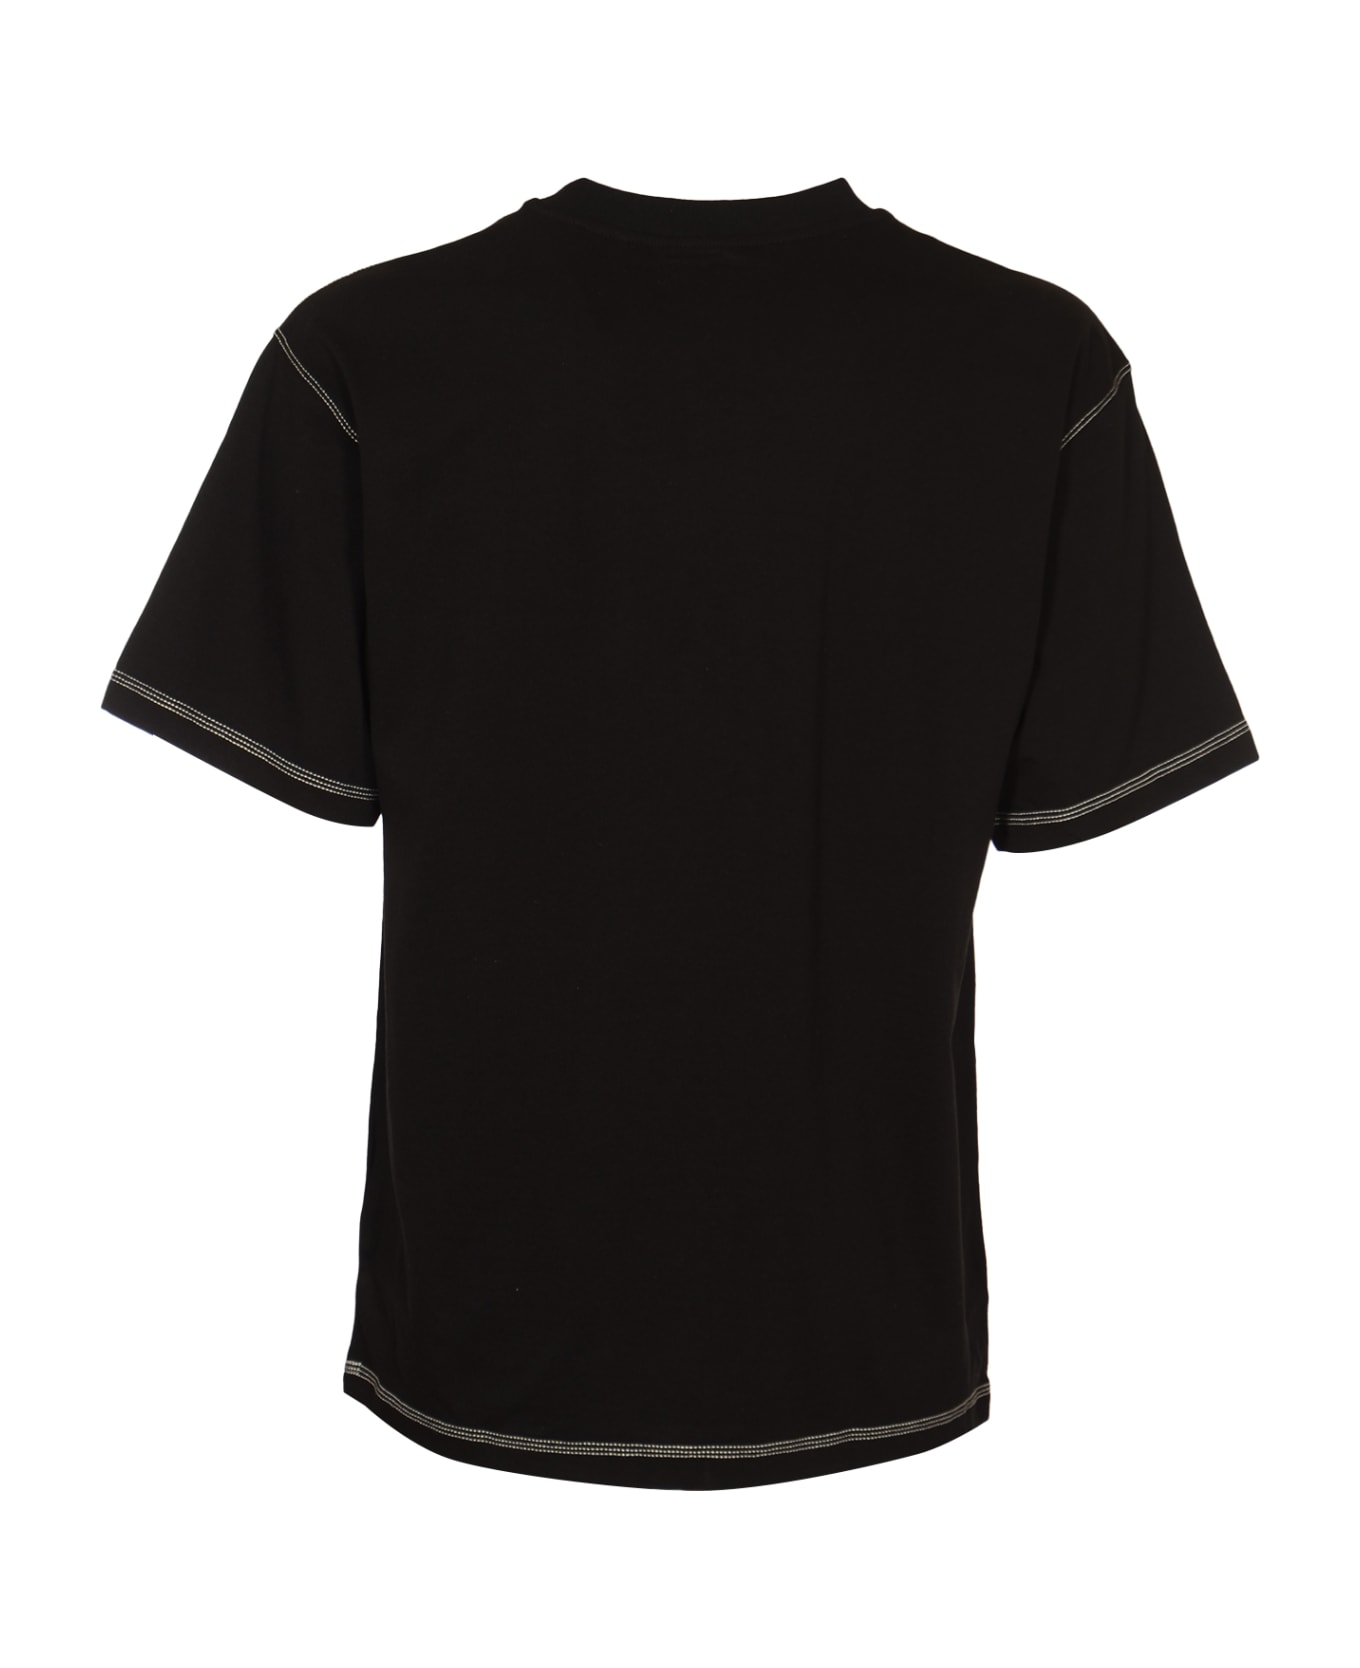 Hugo Boss Nineteen Ninety Three T-shirt - Black シャツ